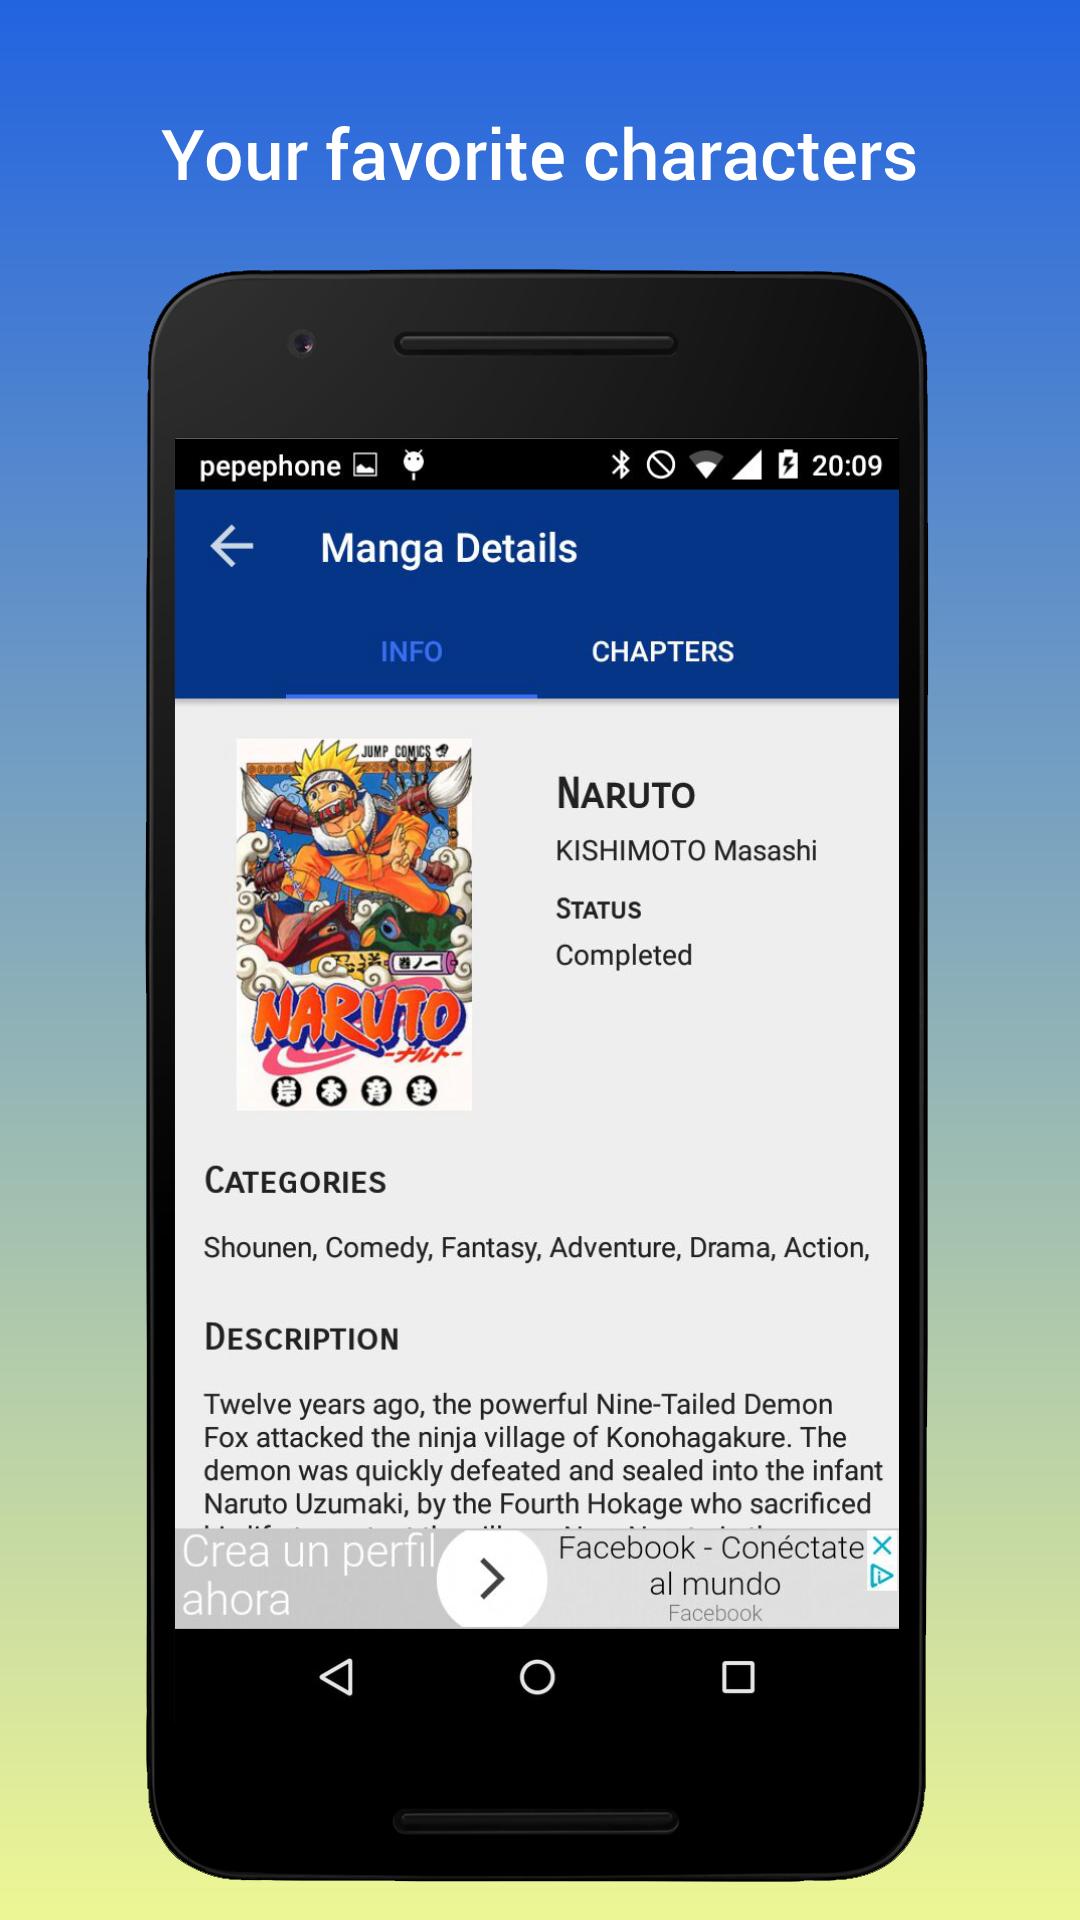 ganso estafador rociar Libros Manga: Los mejores comics manga para leer for Android - APK ...